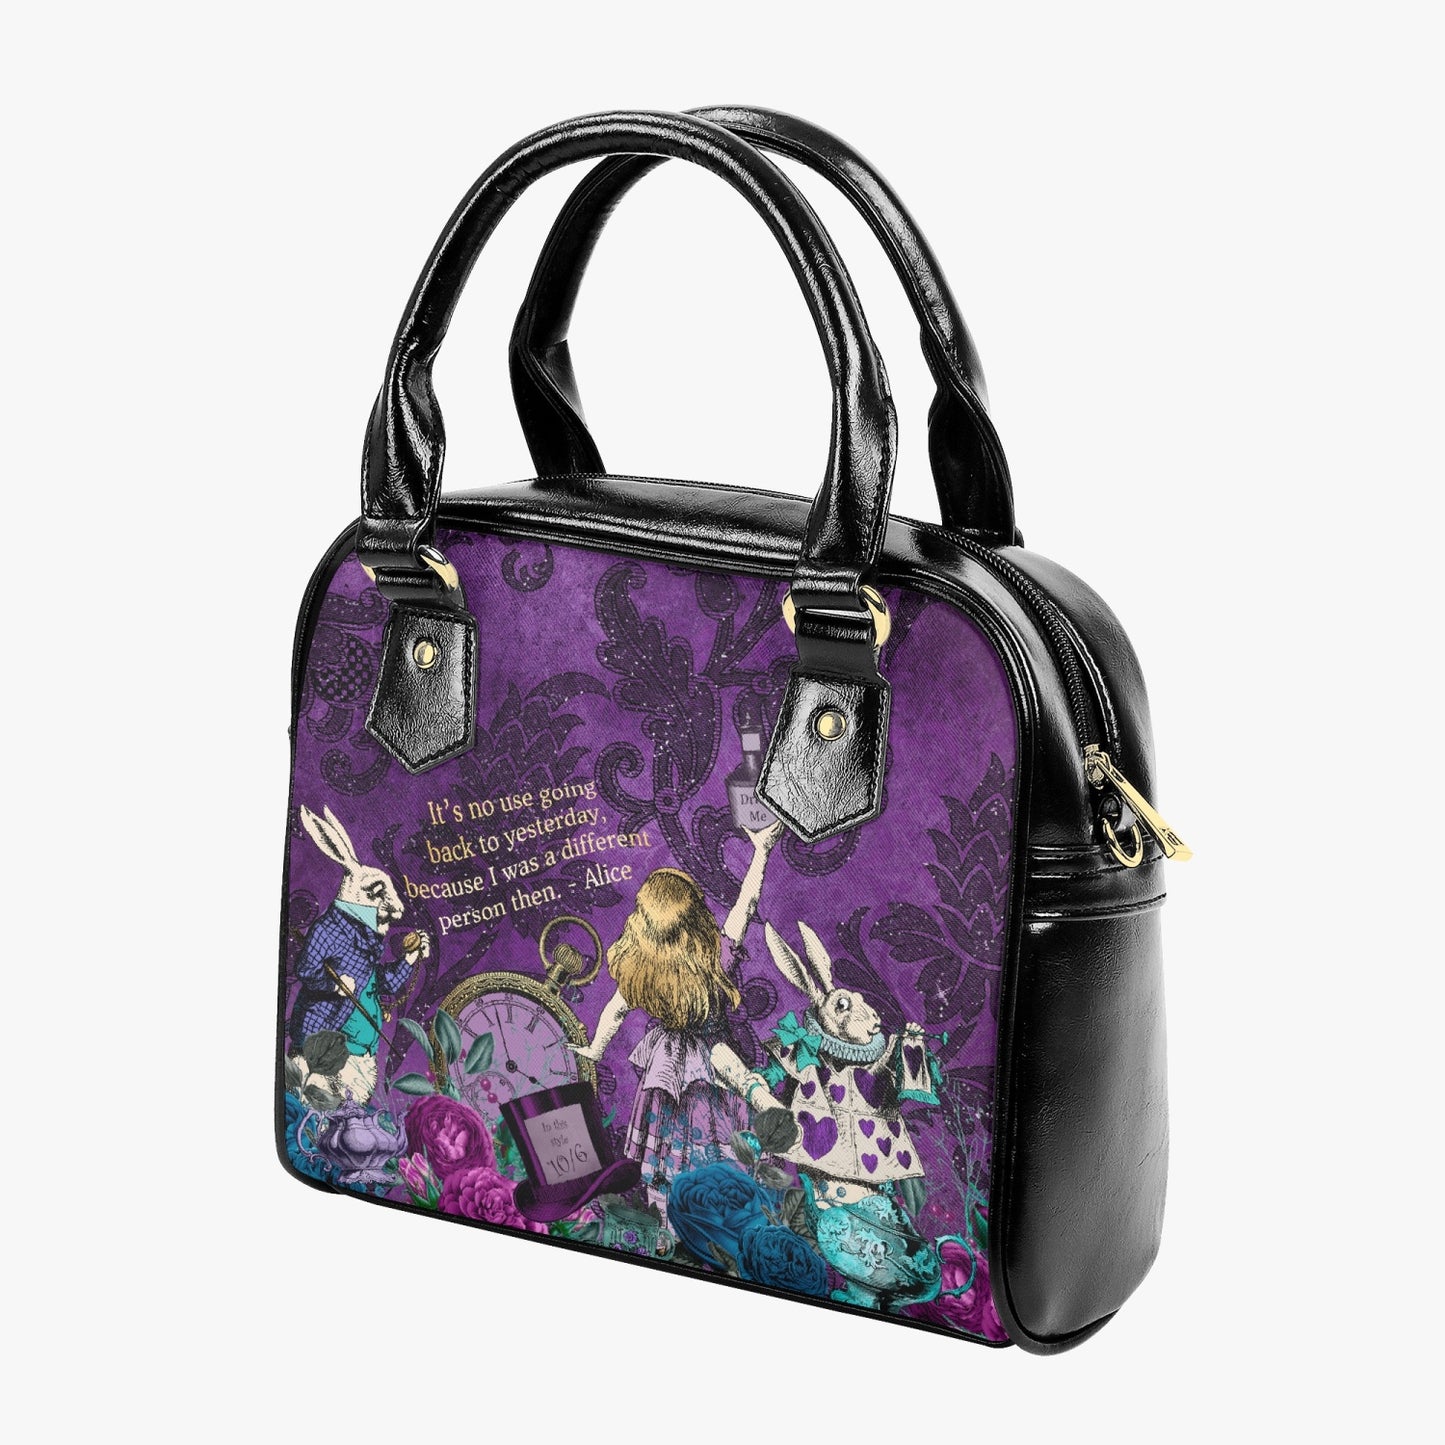 Alice in Wonderland Gothic Purple Handbag - Alice in Wonderland Purse - Mad Hatter Tea Party Accessory (JPHB94RQ)